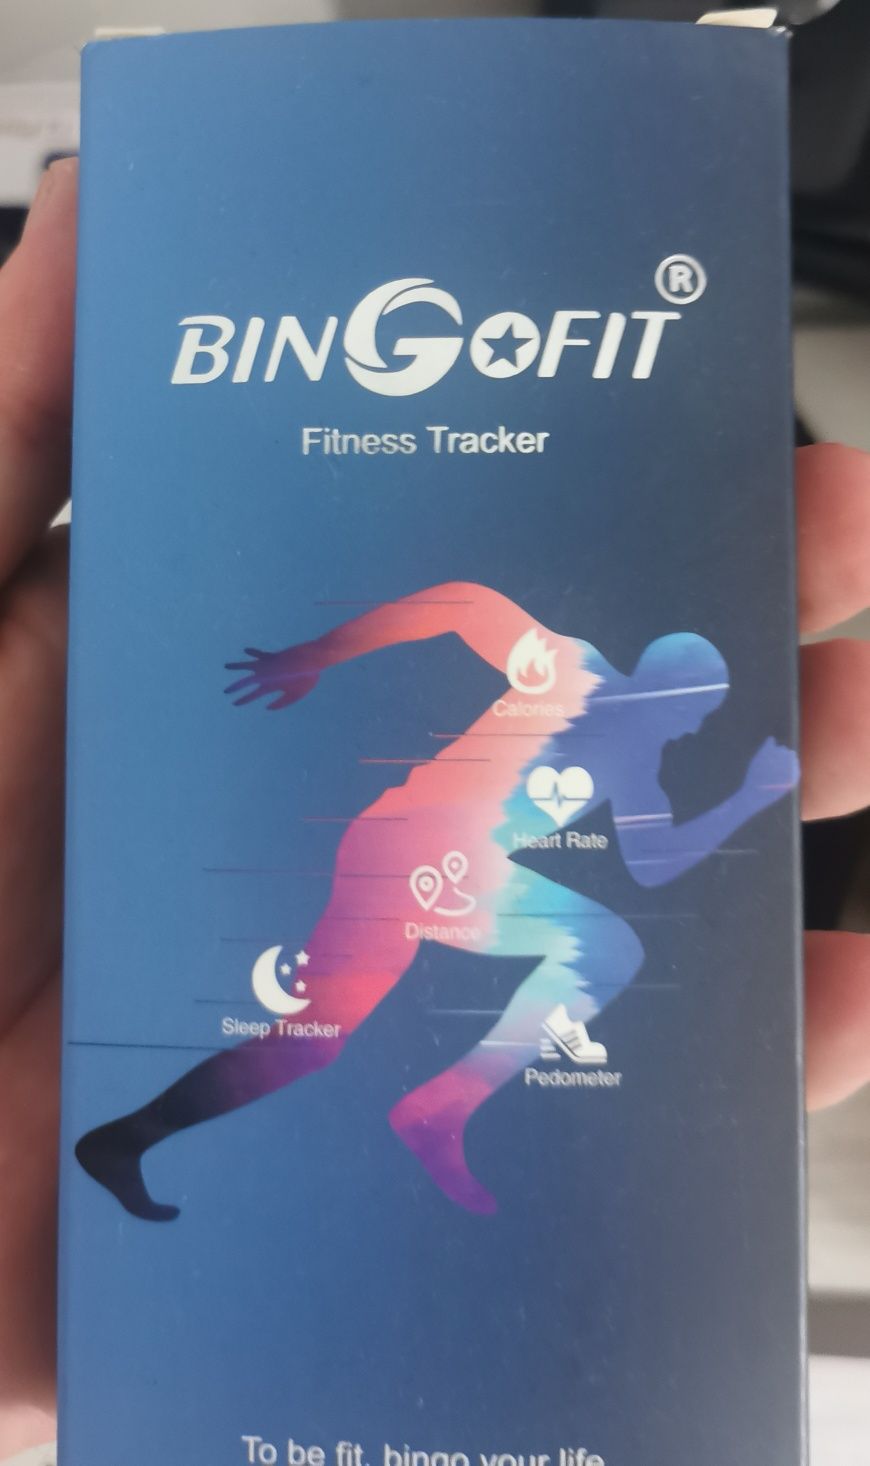 Bingo fit fitness tracker